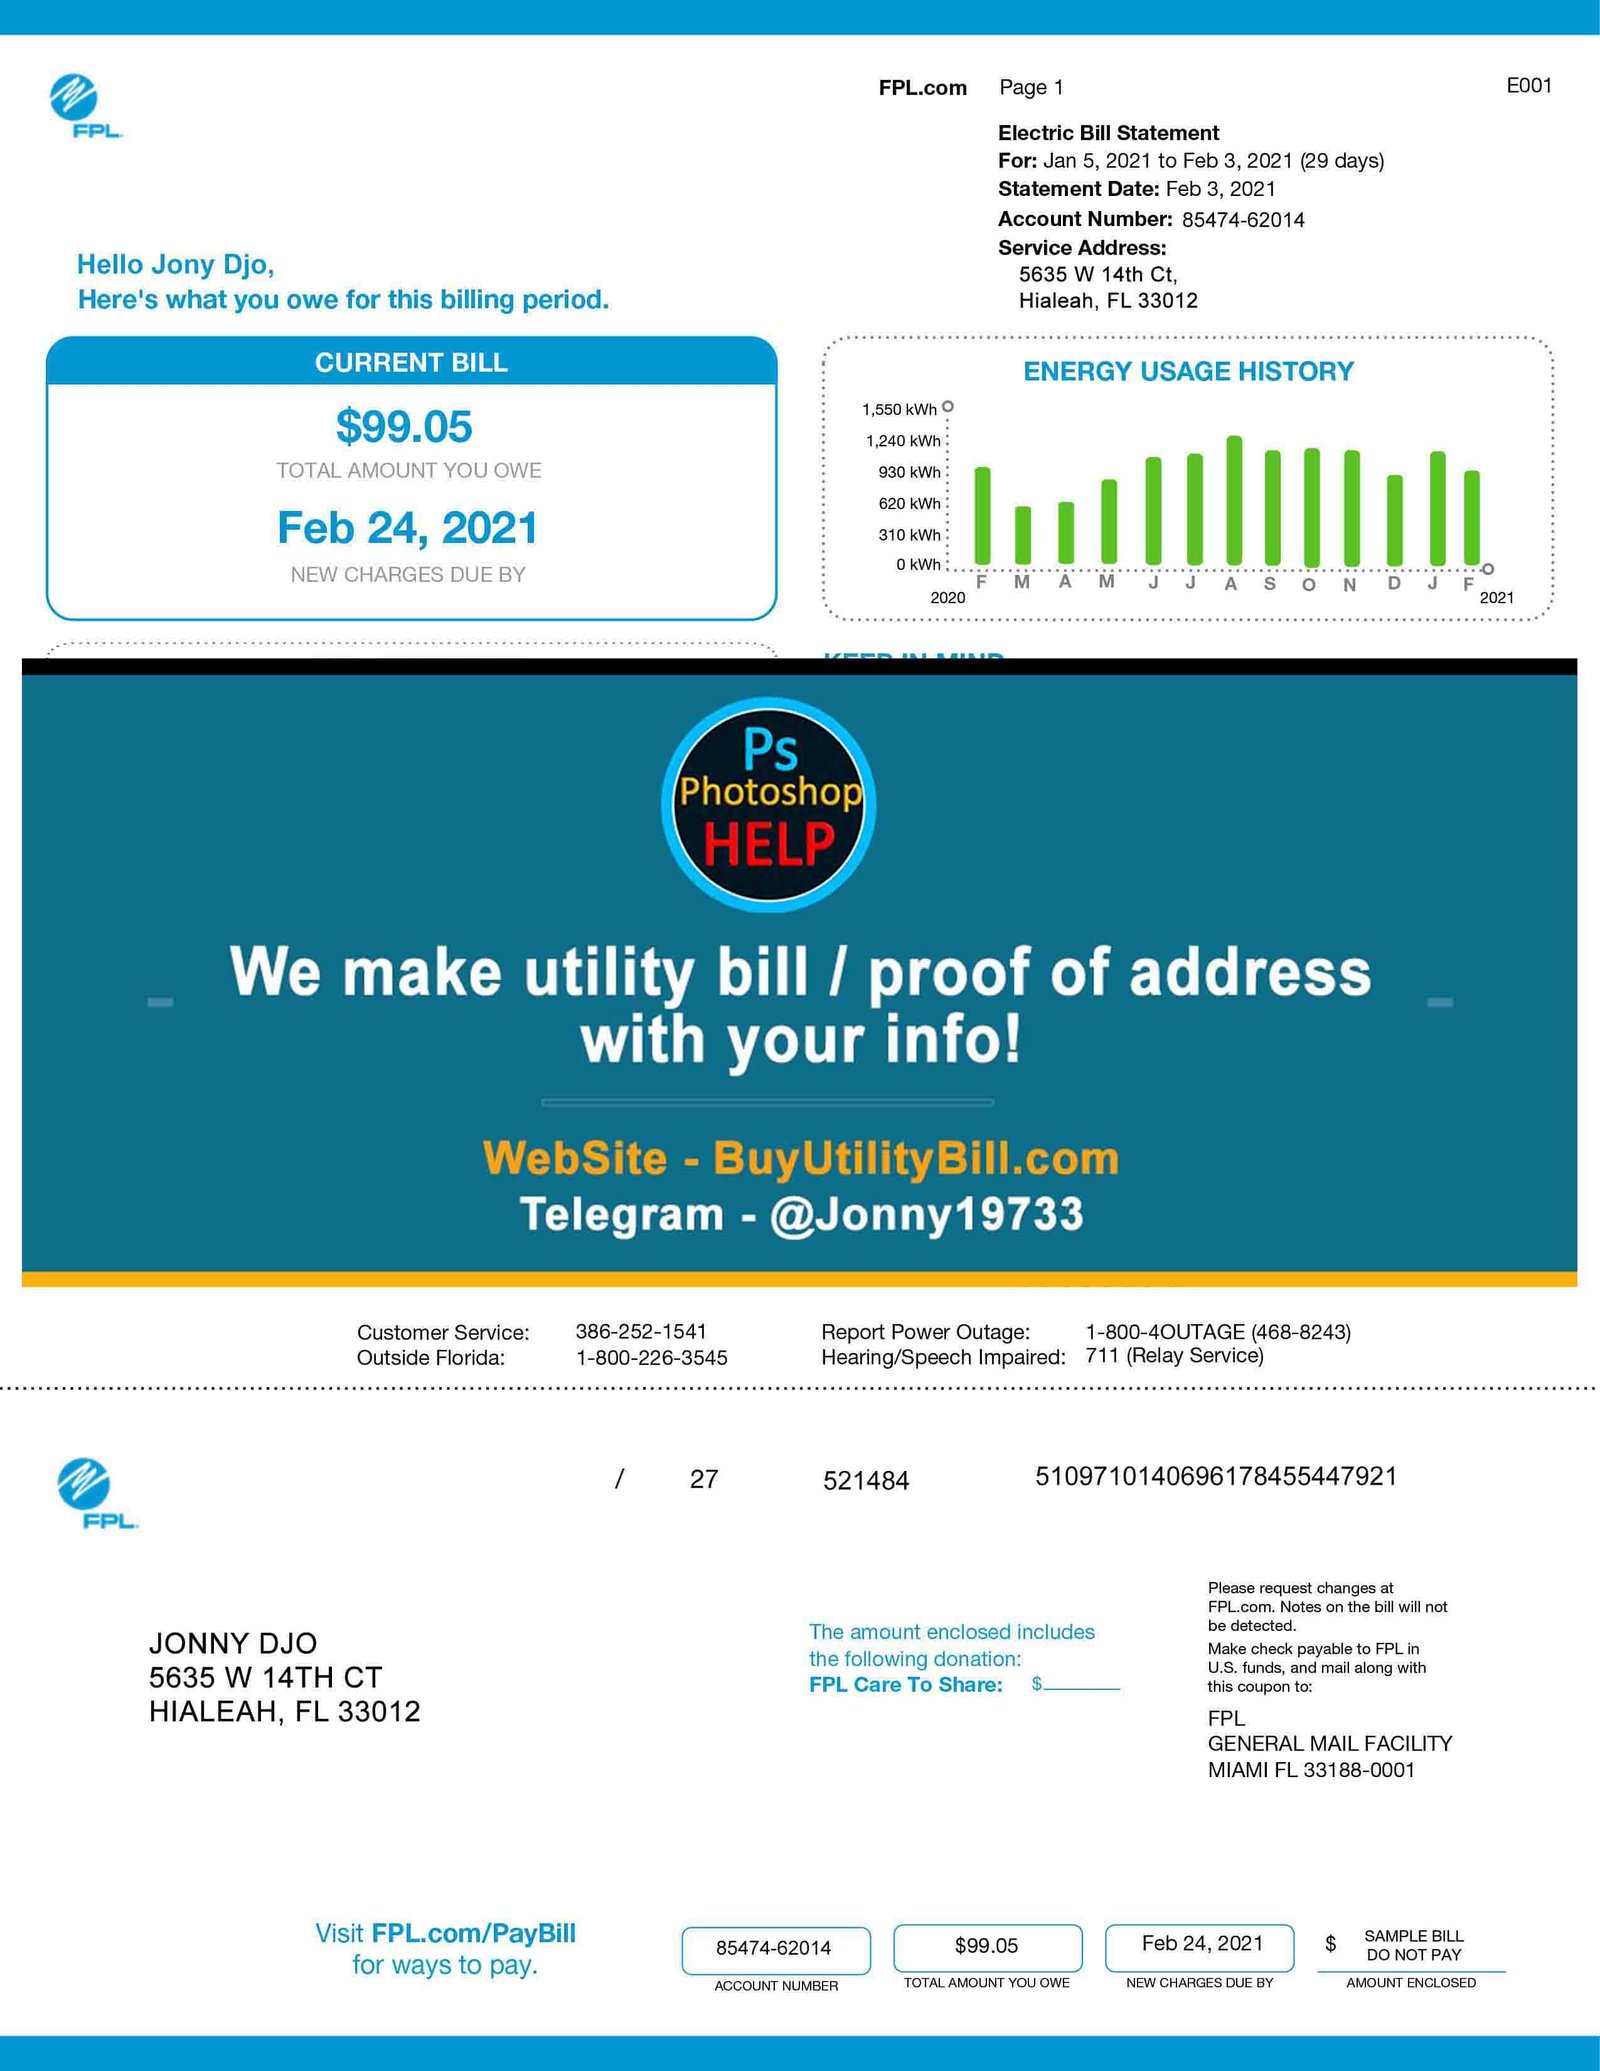 Create Fake Utility Bill Florida FPL ELectric Bill Statement